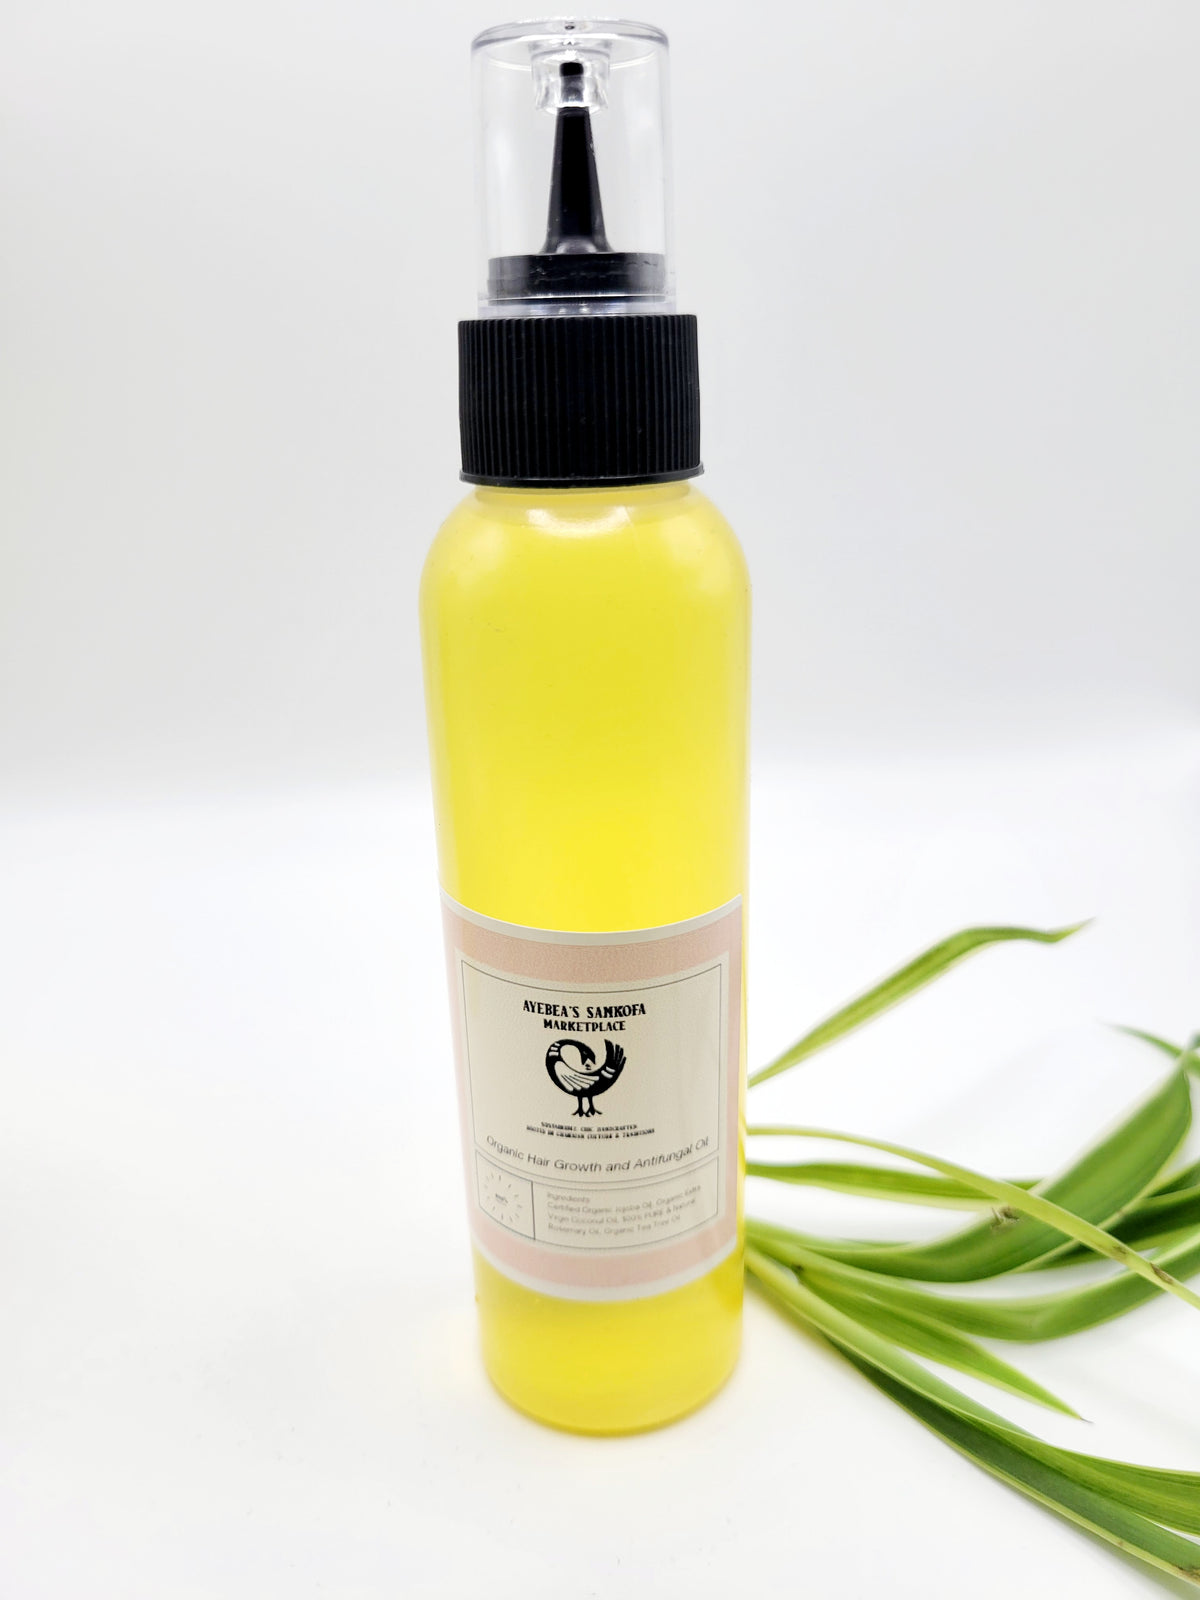 Natural Hair Oil For Growth | Organic Hair Oil | Ayebea's Sankofa